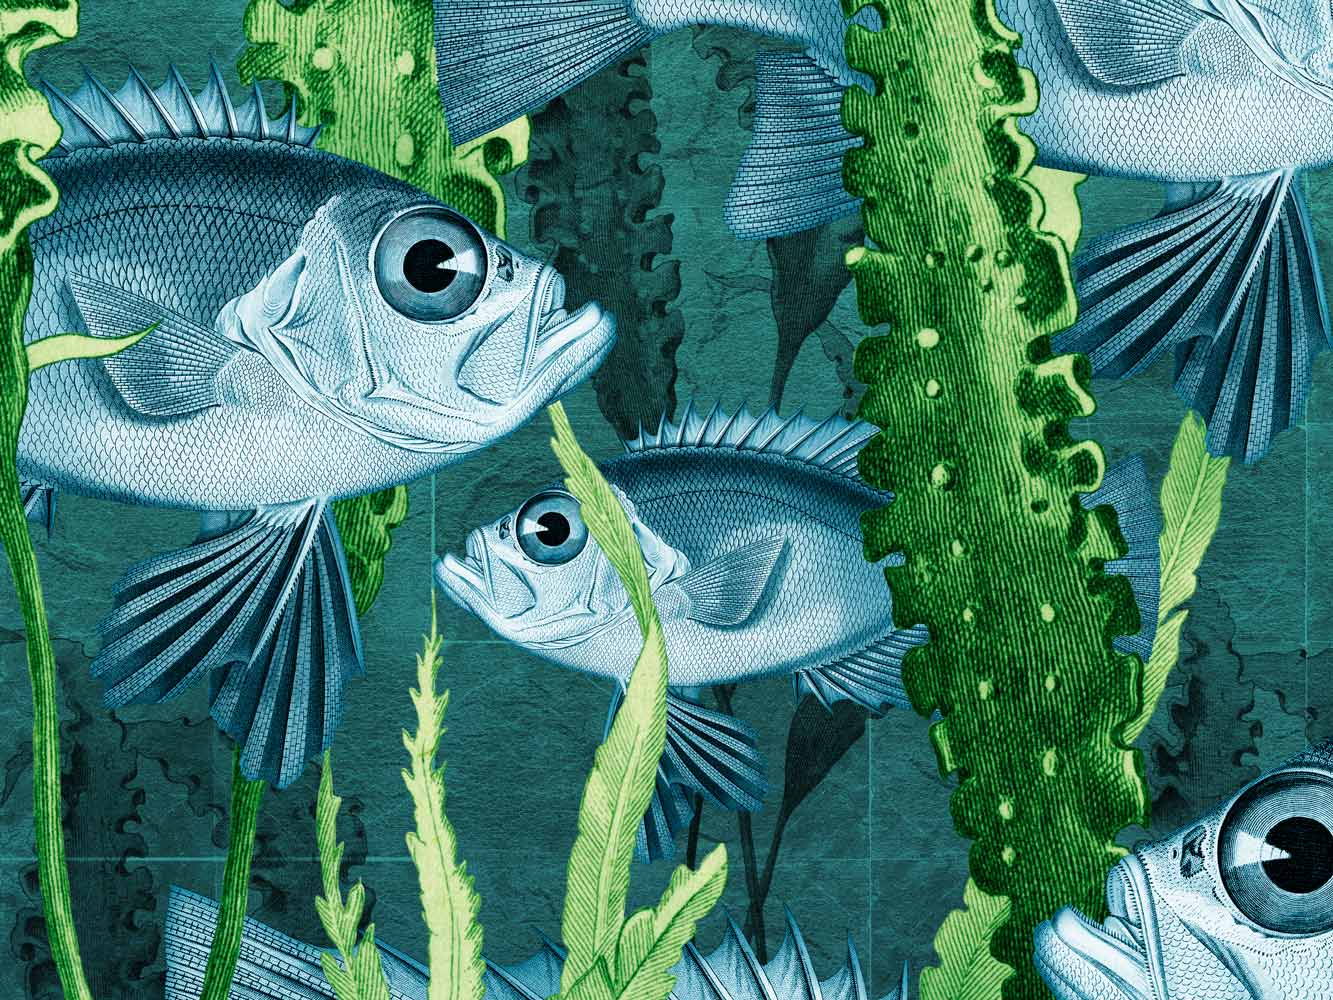 Glass eye fish design in ocean colourway